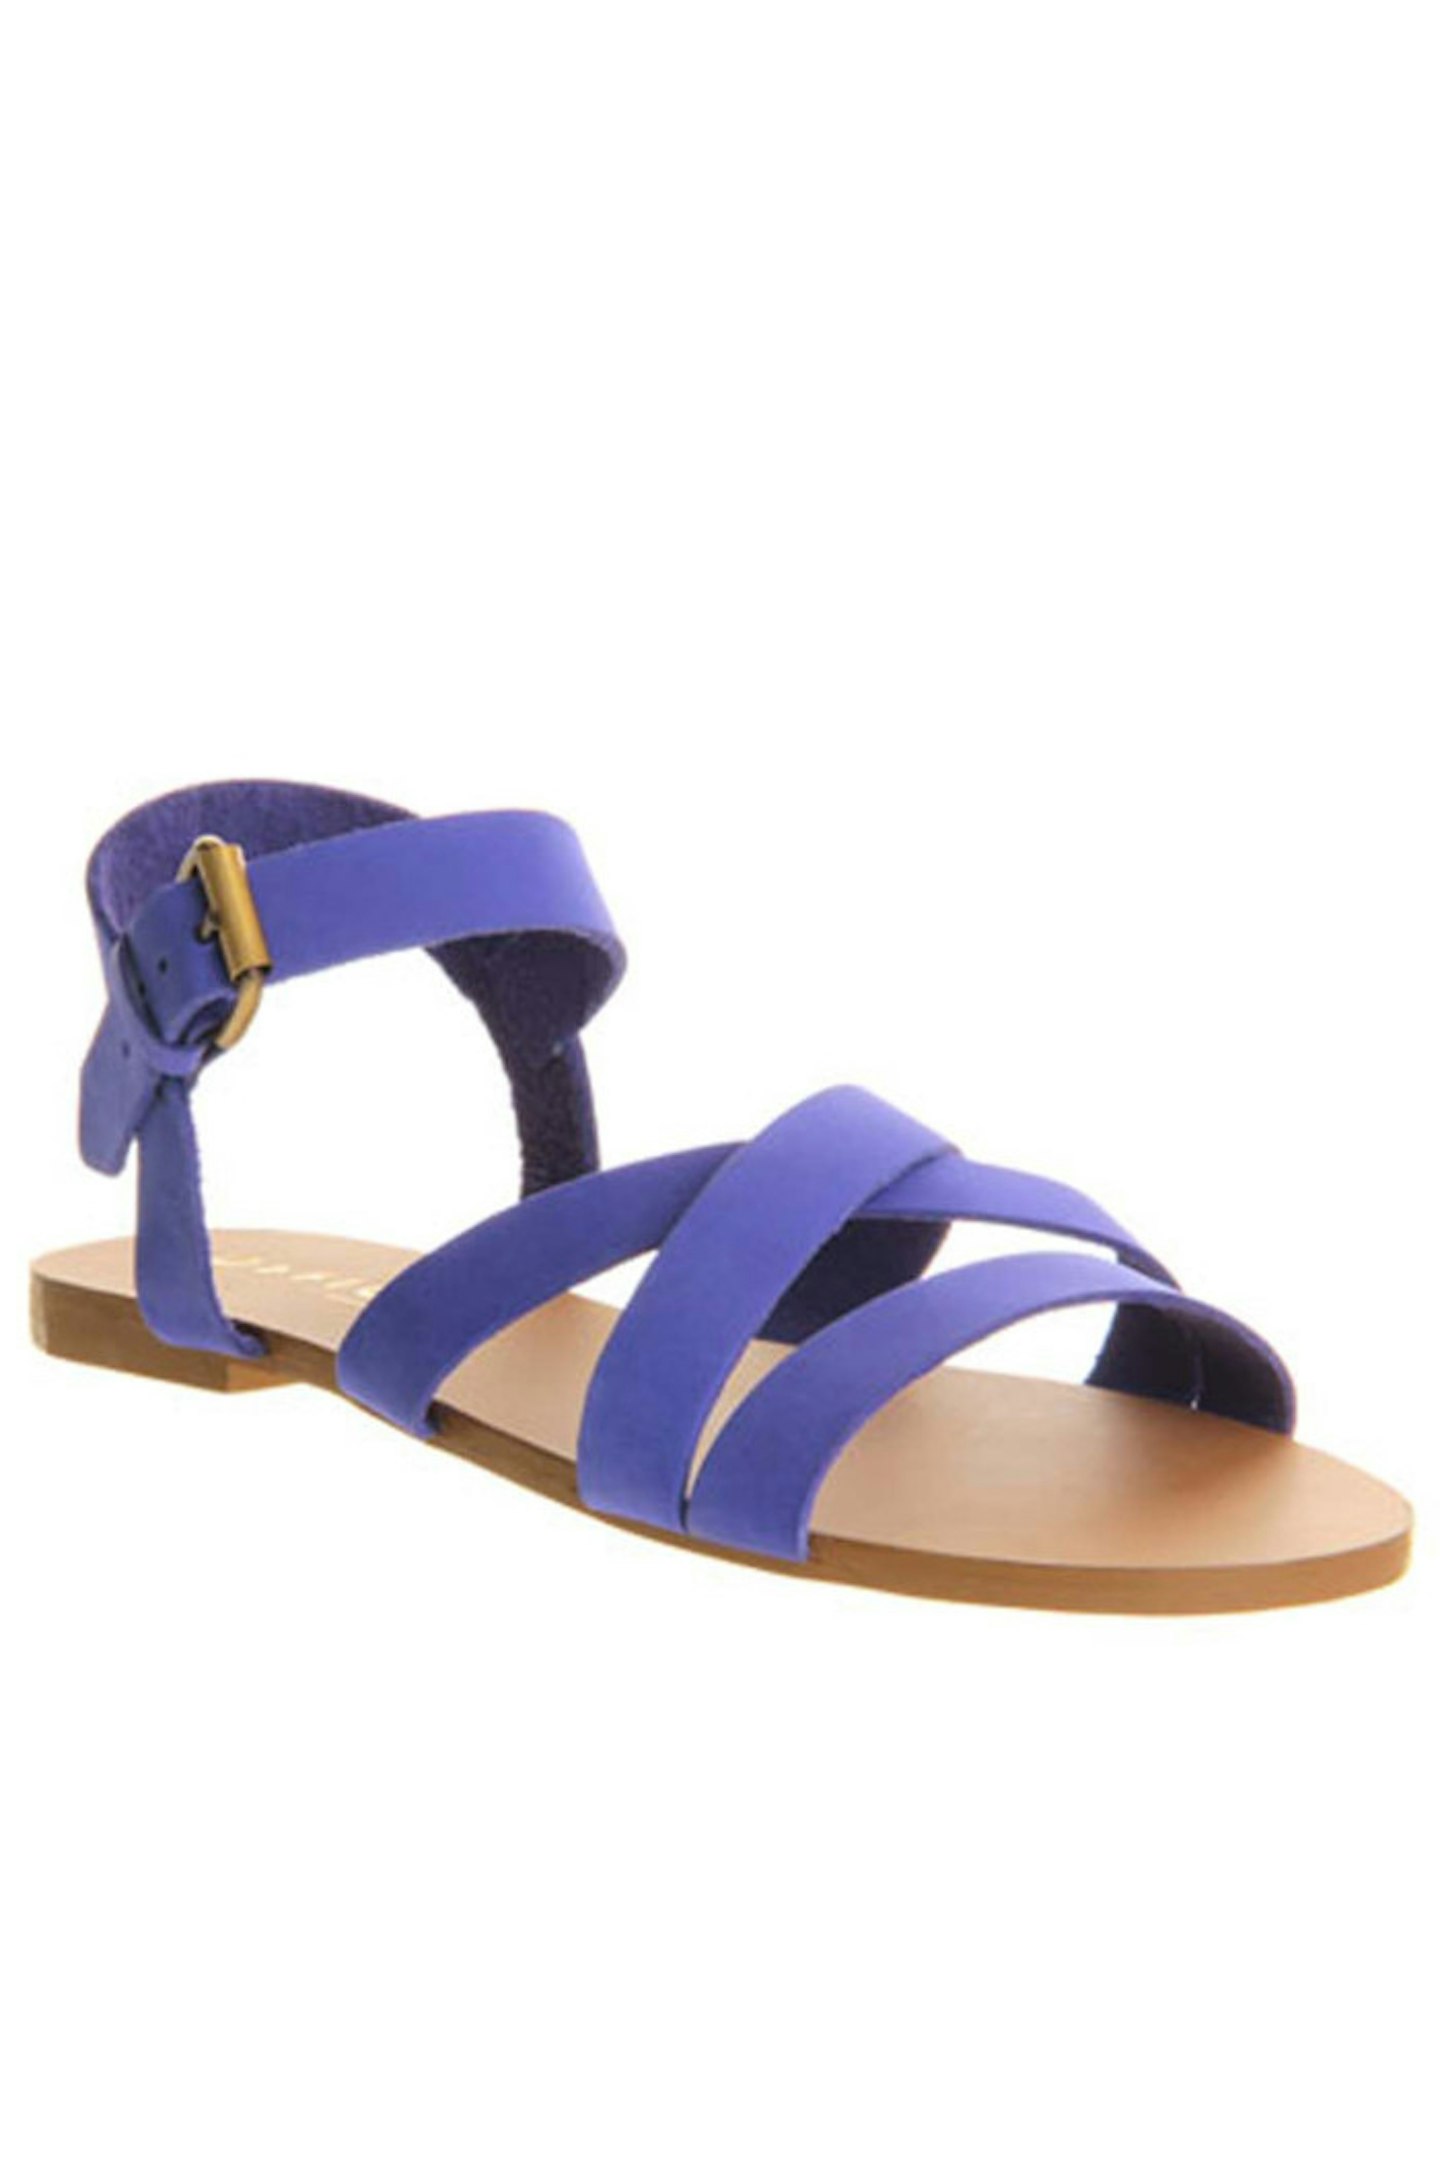 3. Hawaii Cobalt Blue Nubuck Sandal